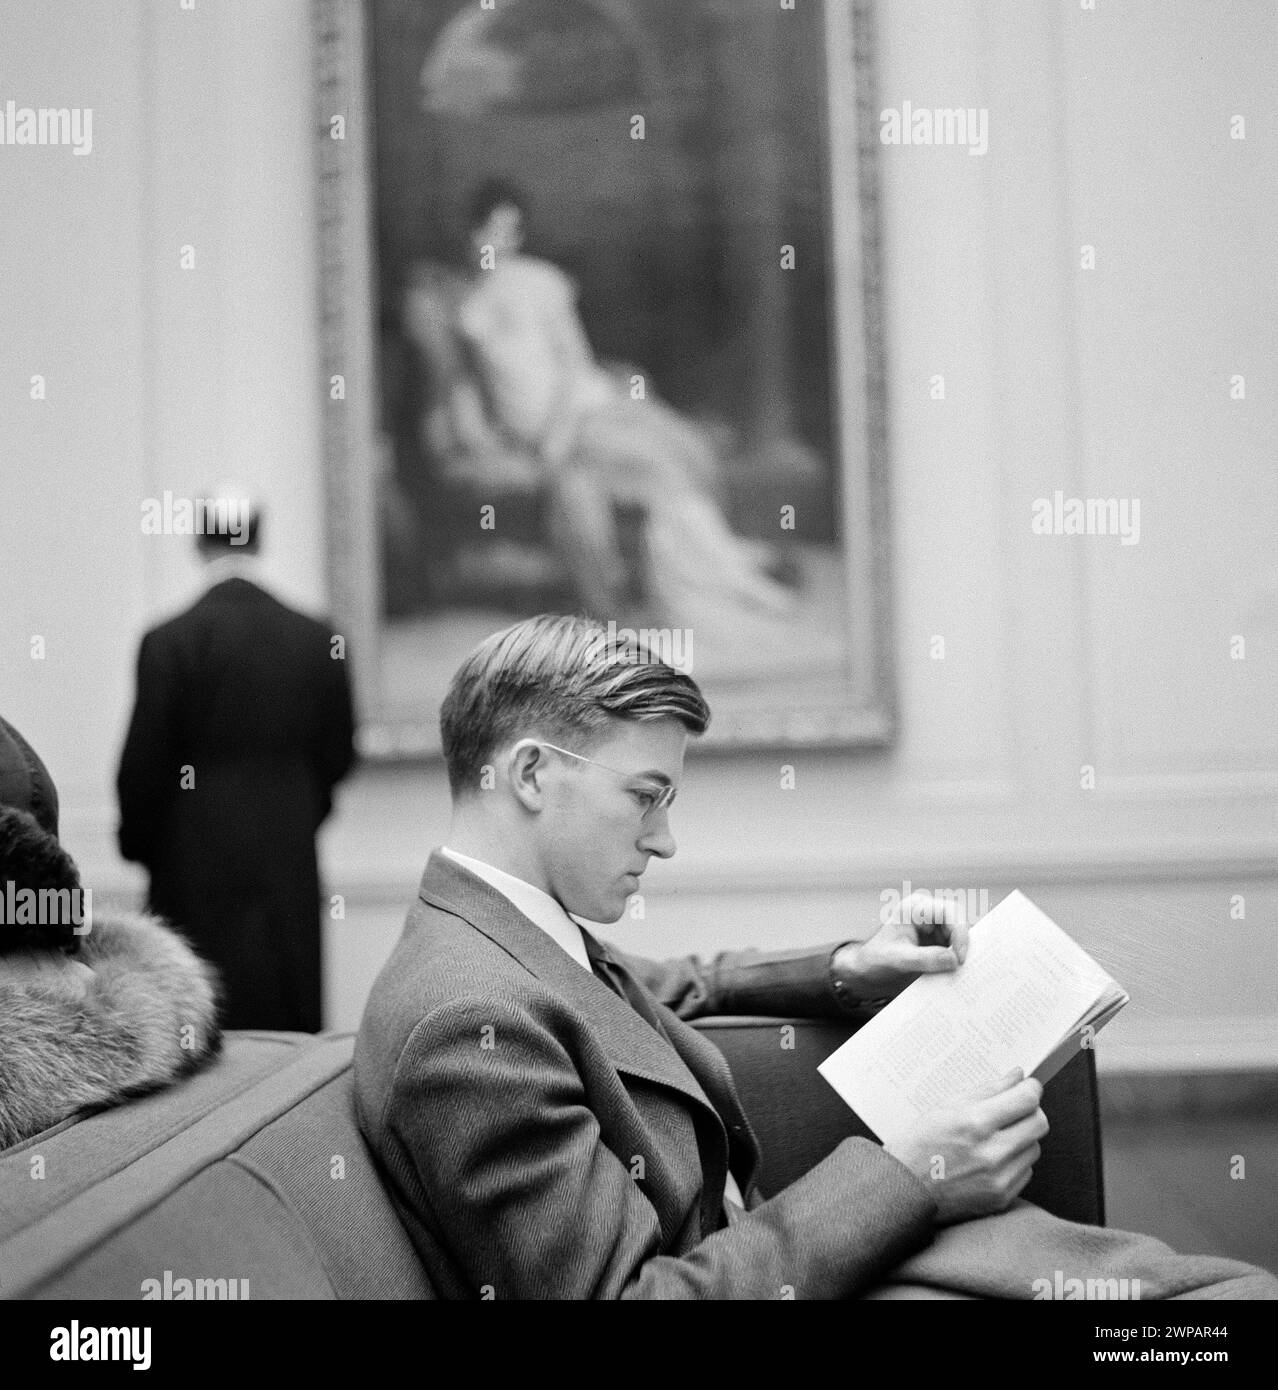 Zuschauer am Sonntagnachmittag, National Gallery of Art, Washington, D.C., USA, Esther Bubley, U.S. Office of war Information, März 1942 Stockfoto